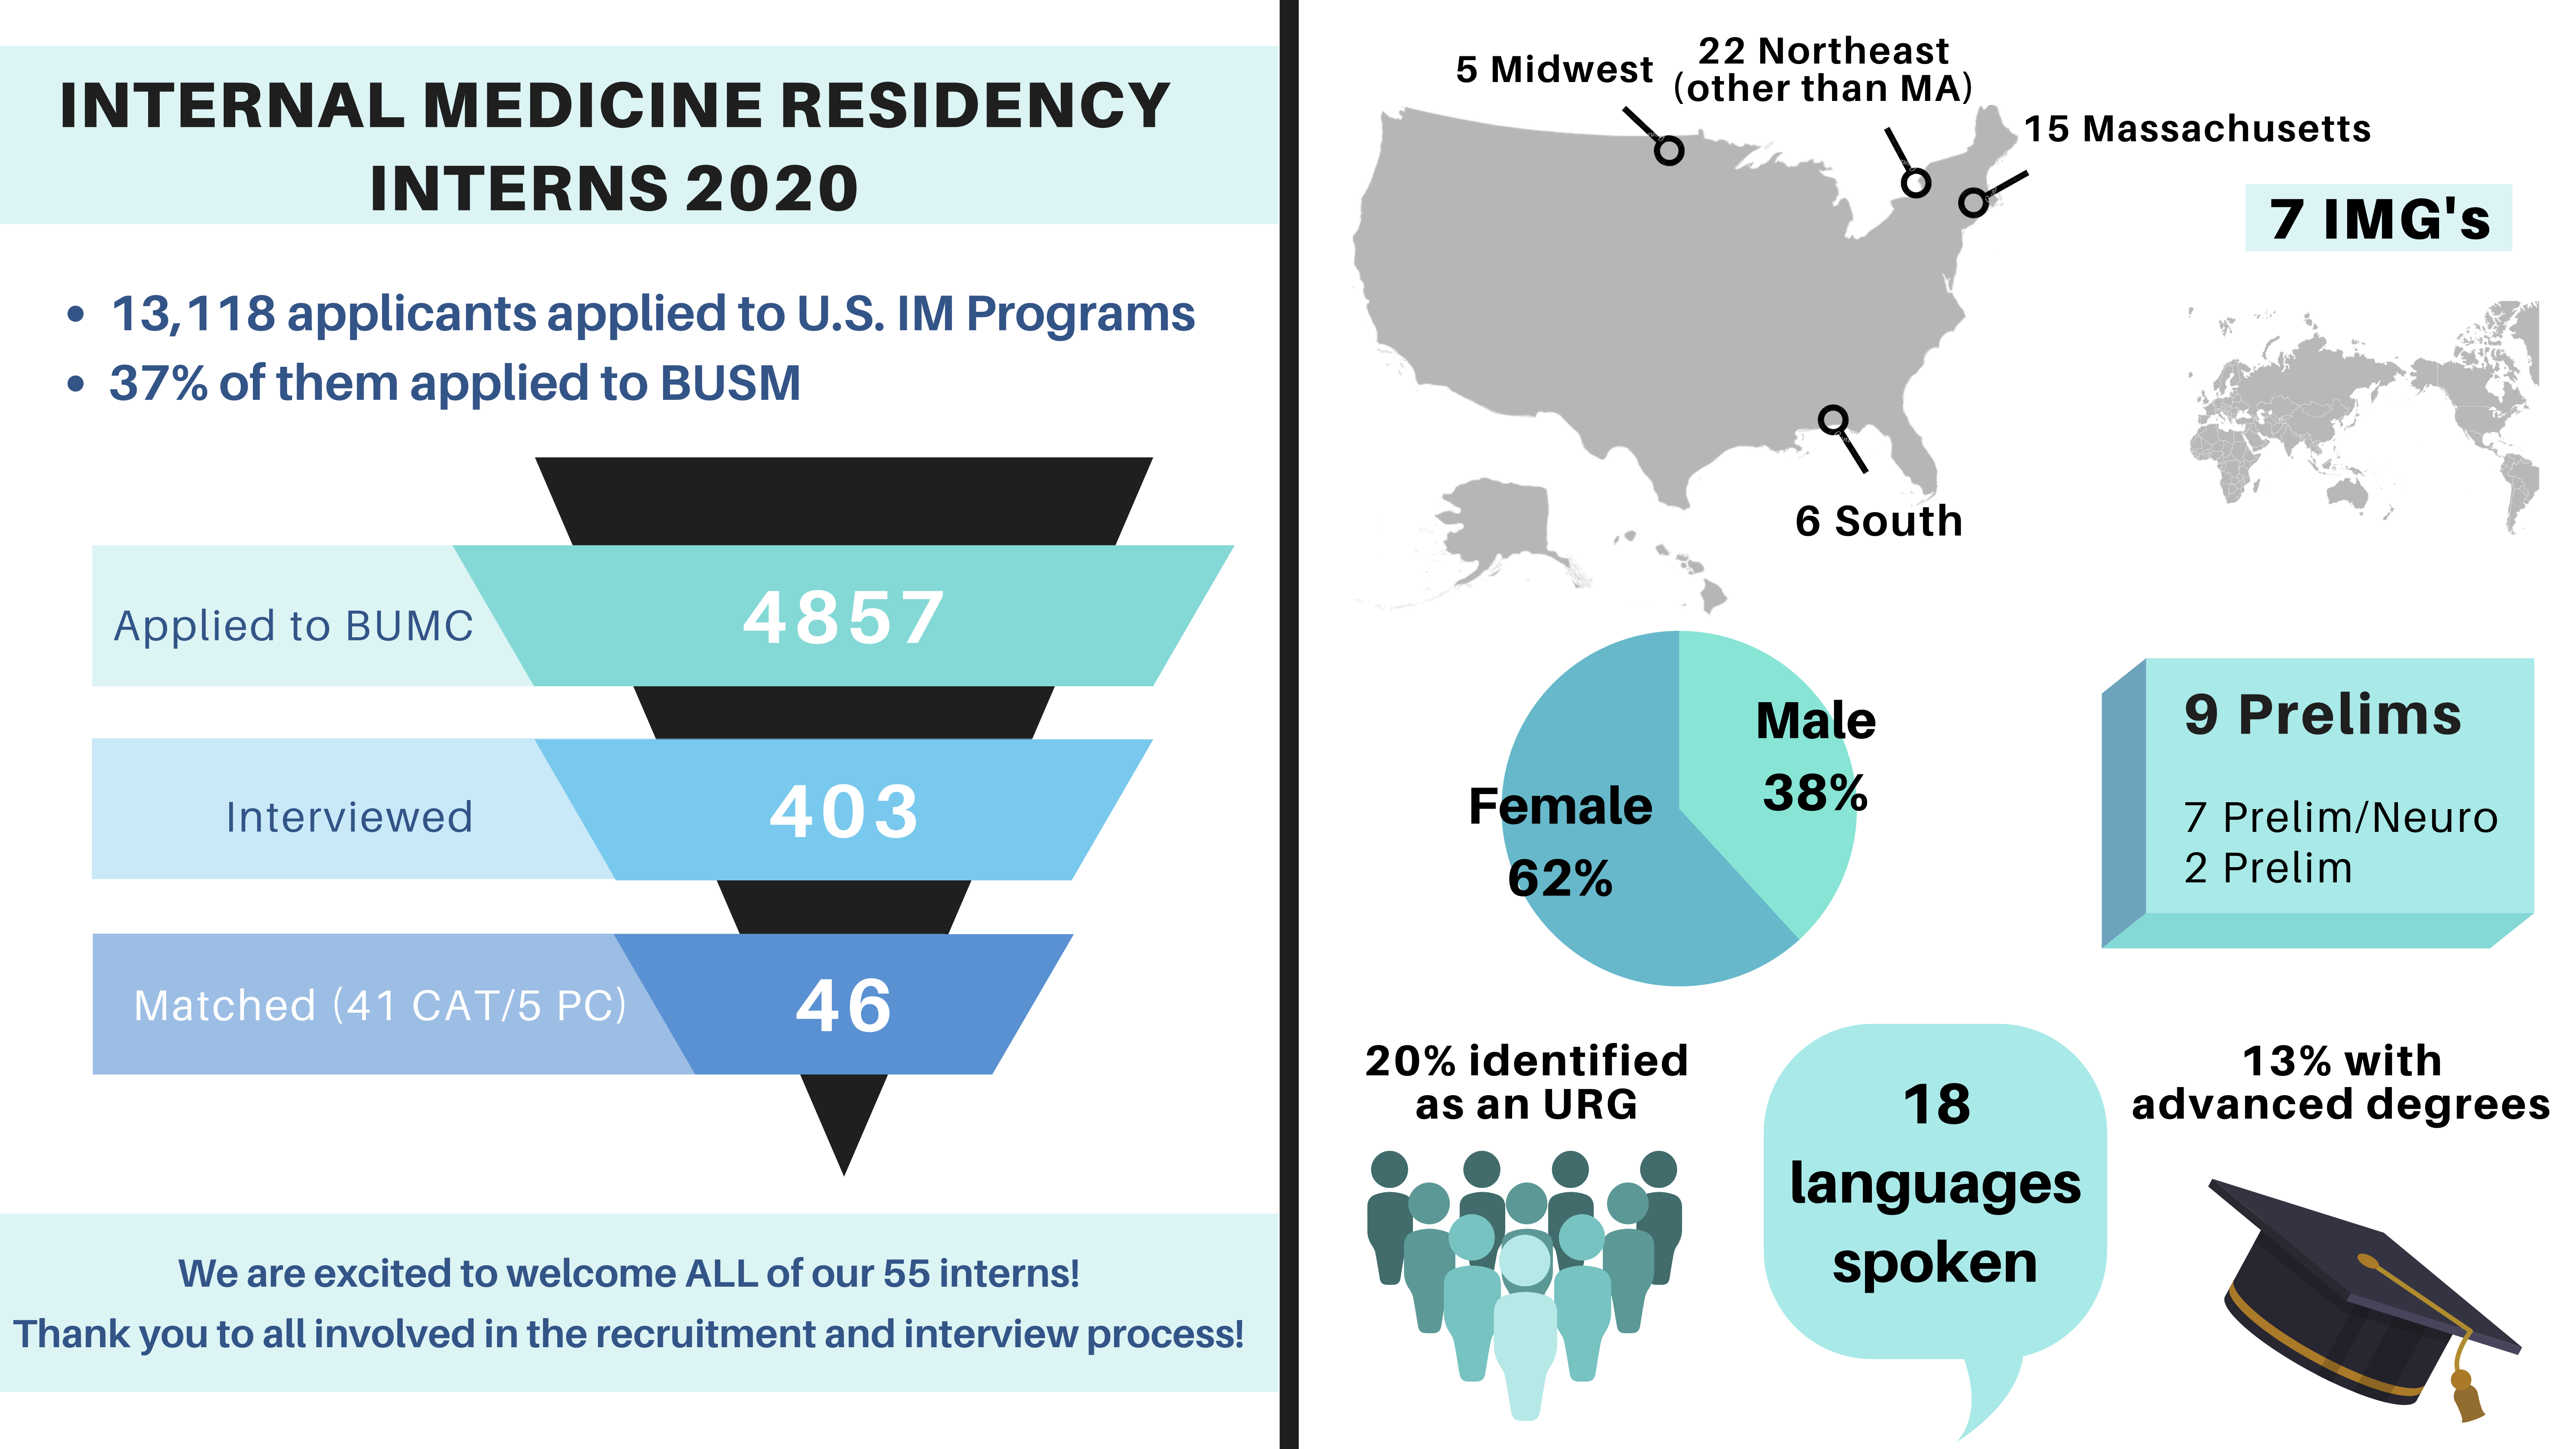 Internal Medicine Residency Intern Match 2020 Info Graphic